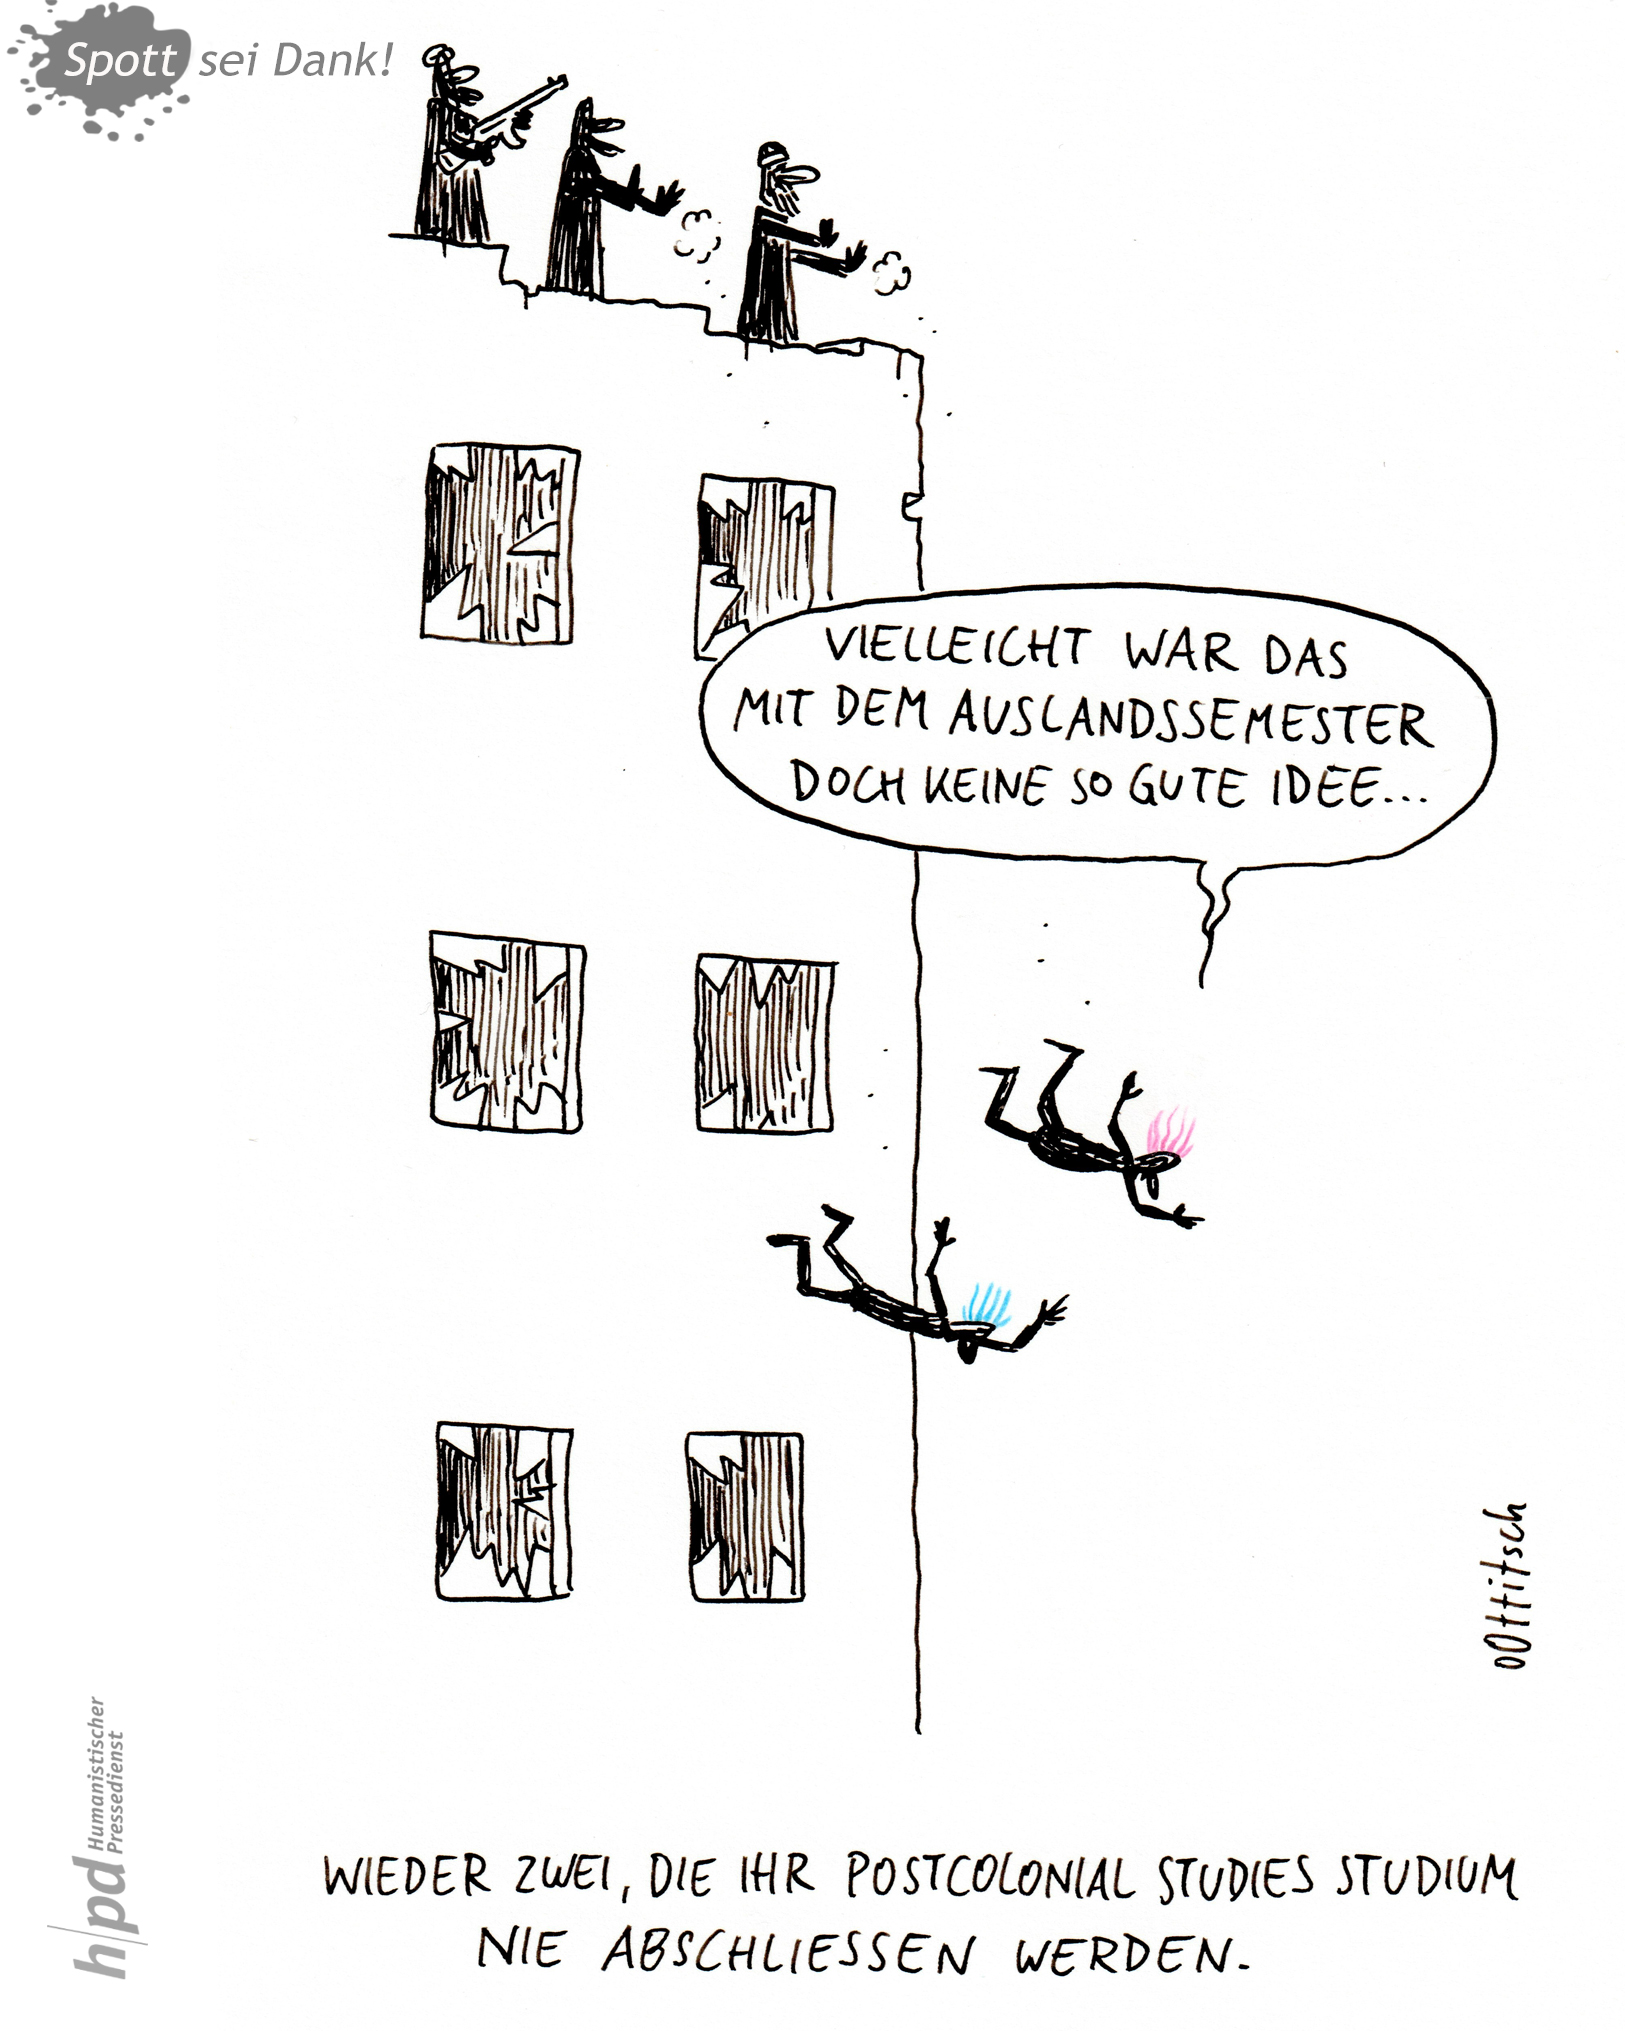 Karikatur: Oliver Ottitsch